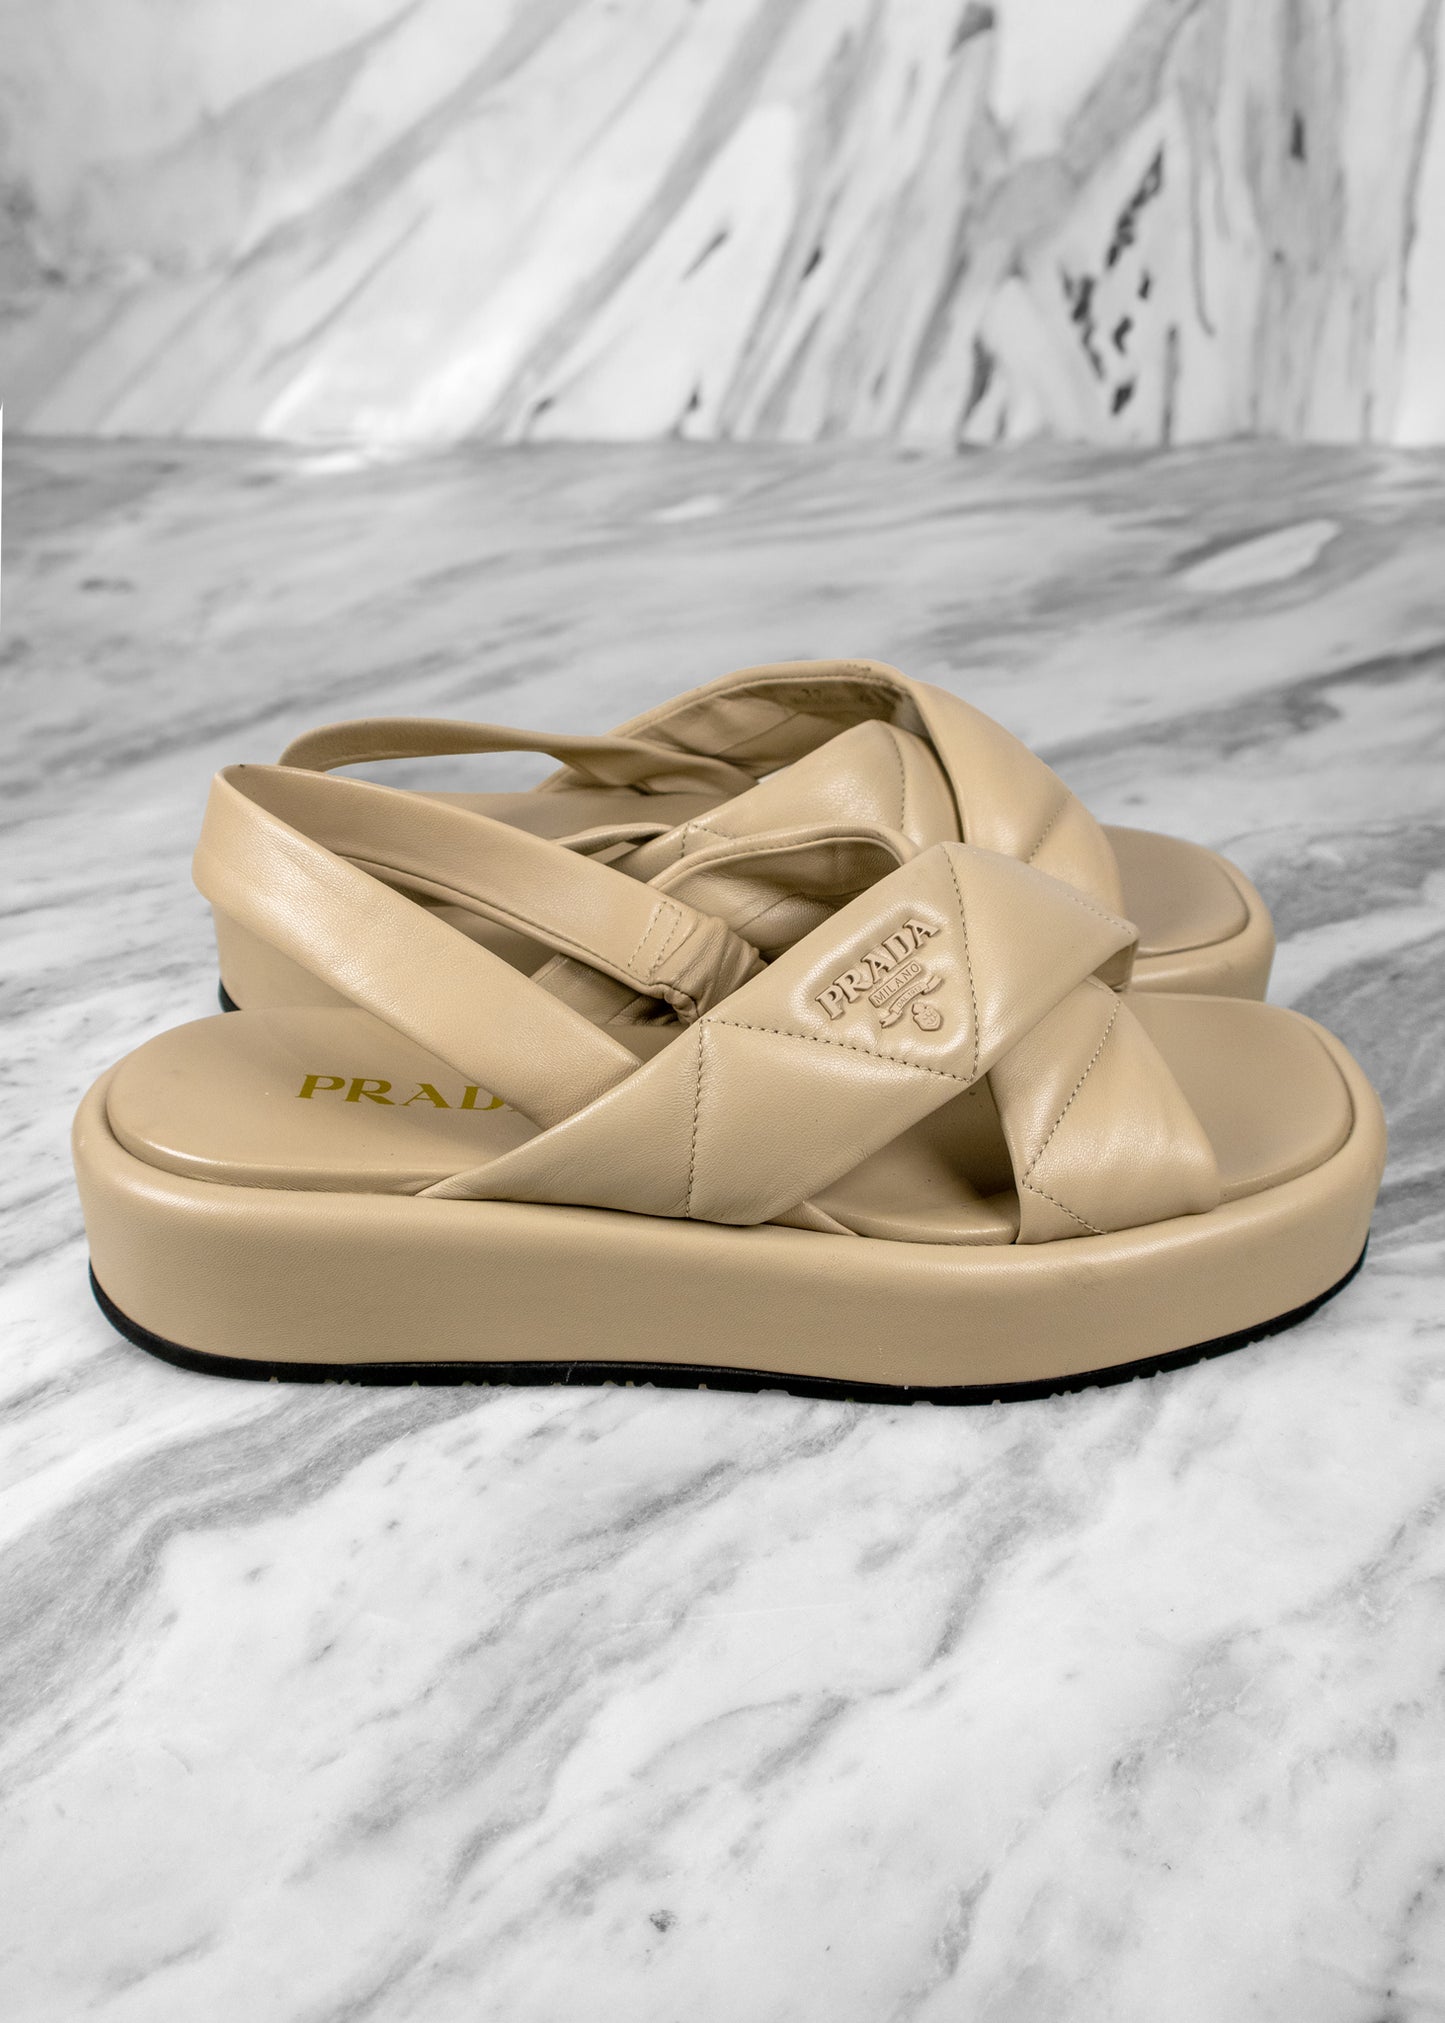 Prada Quilted Nappa Leather Flatform Sandals